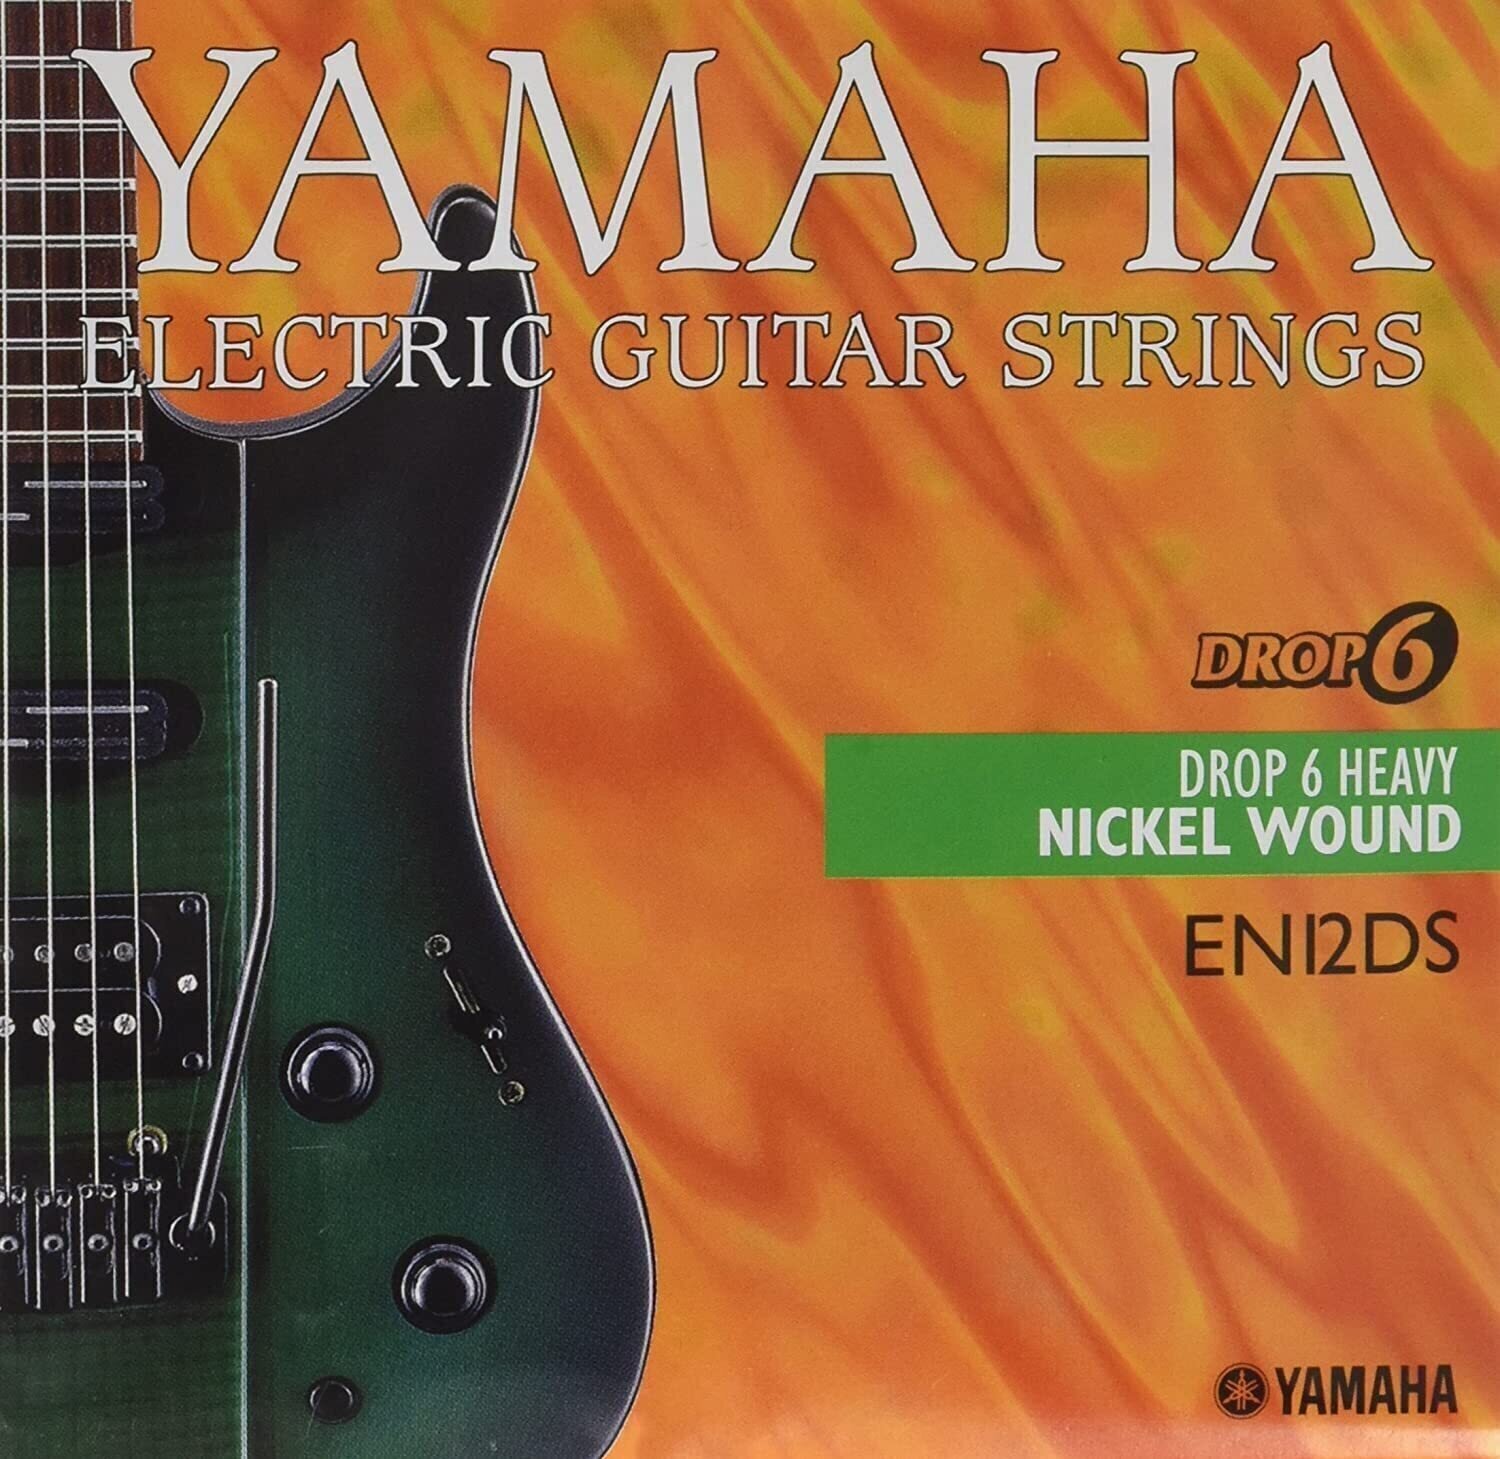 E-guitar strings Yamaha EN 12 DS